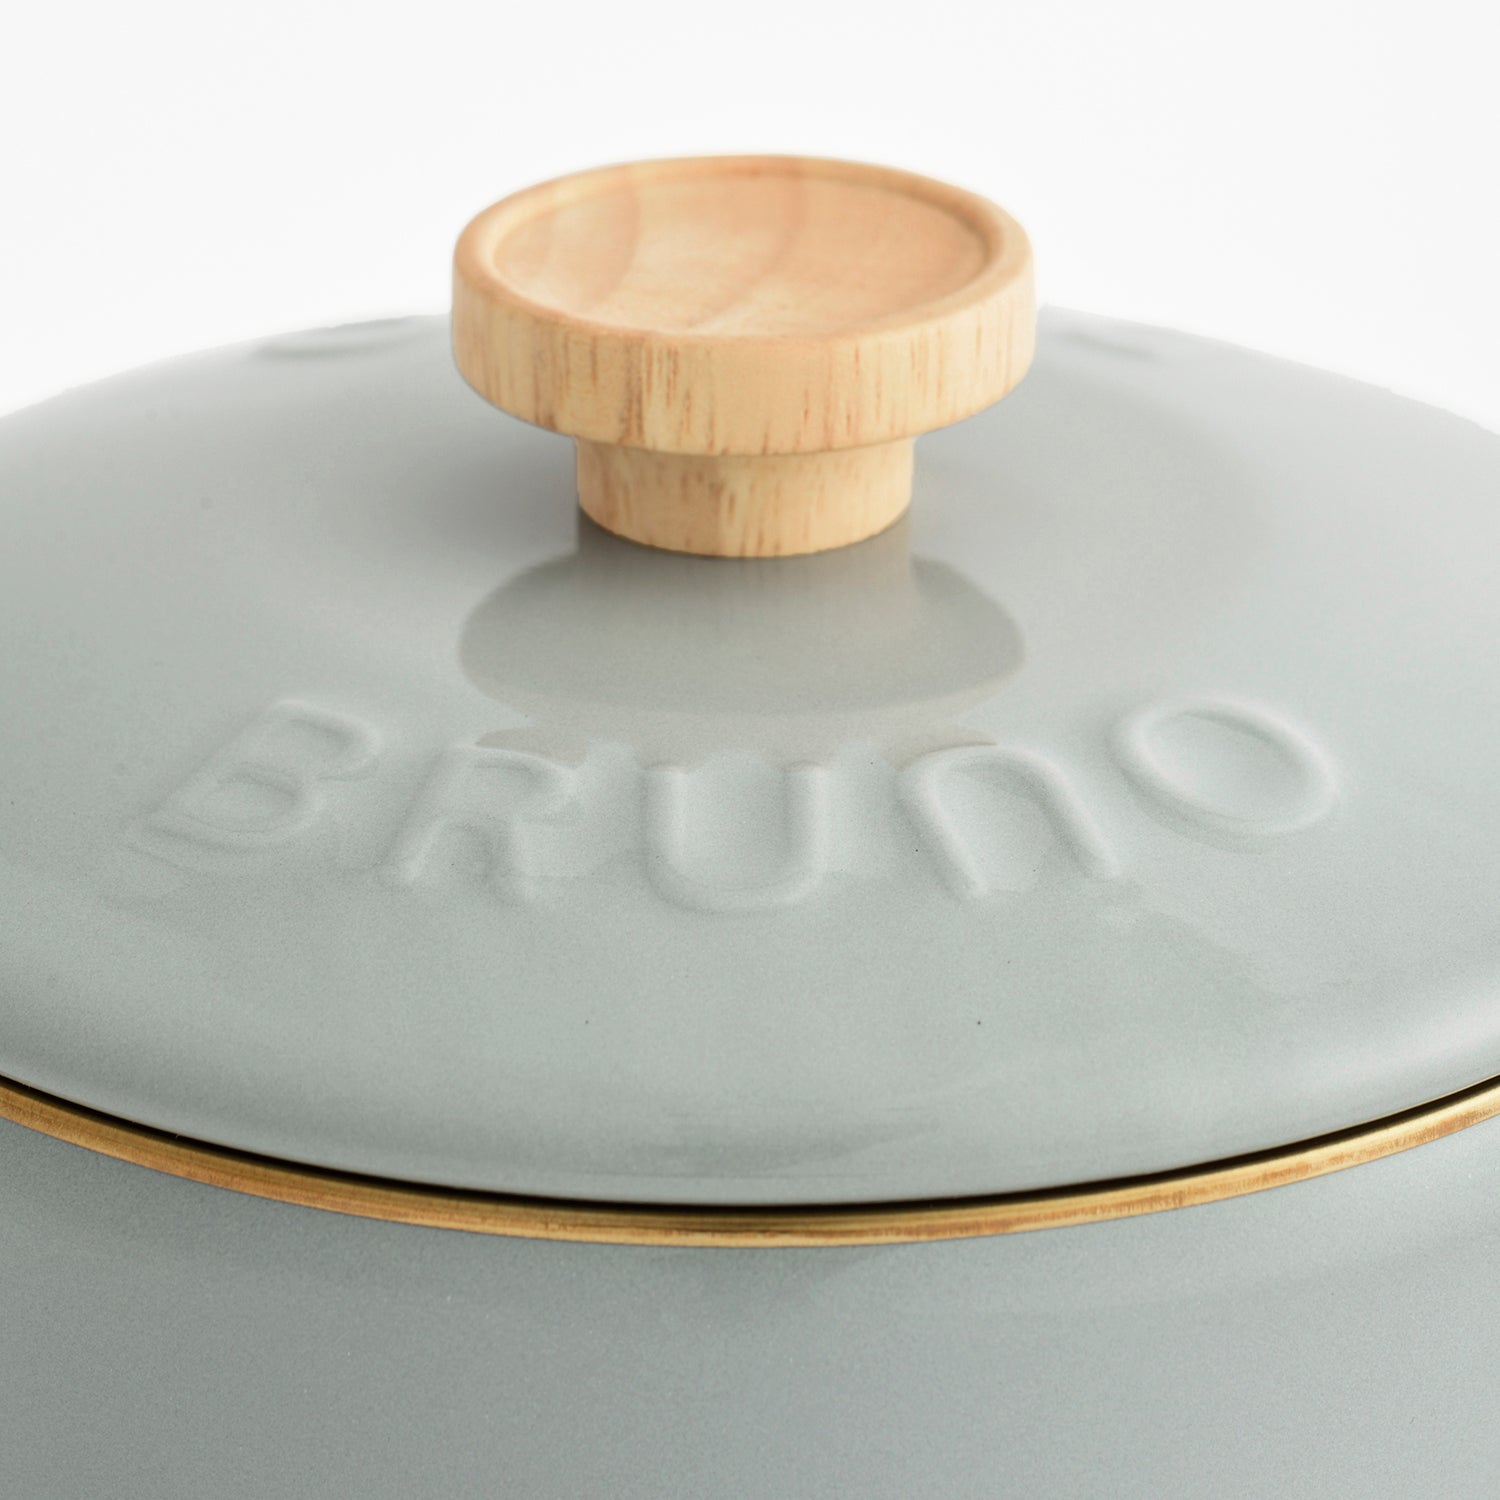 BRUNO 16cm 琺瑯單柄鍋 - 藍綠色